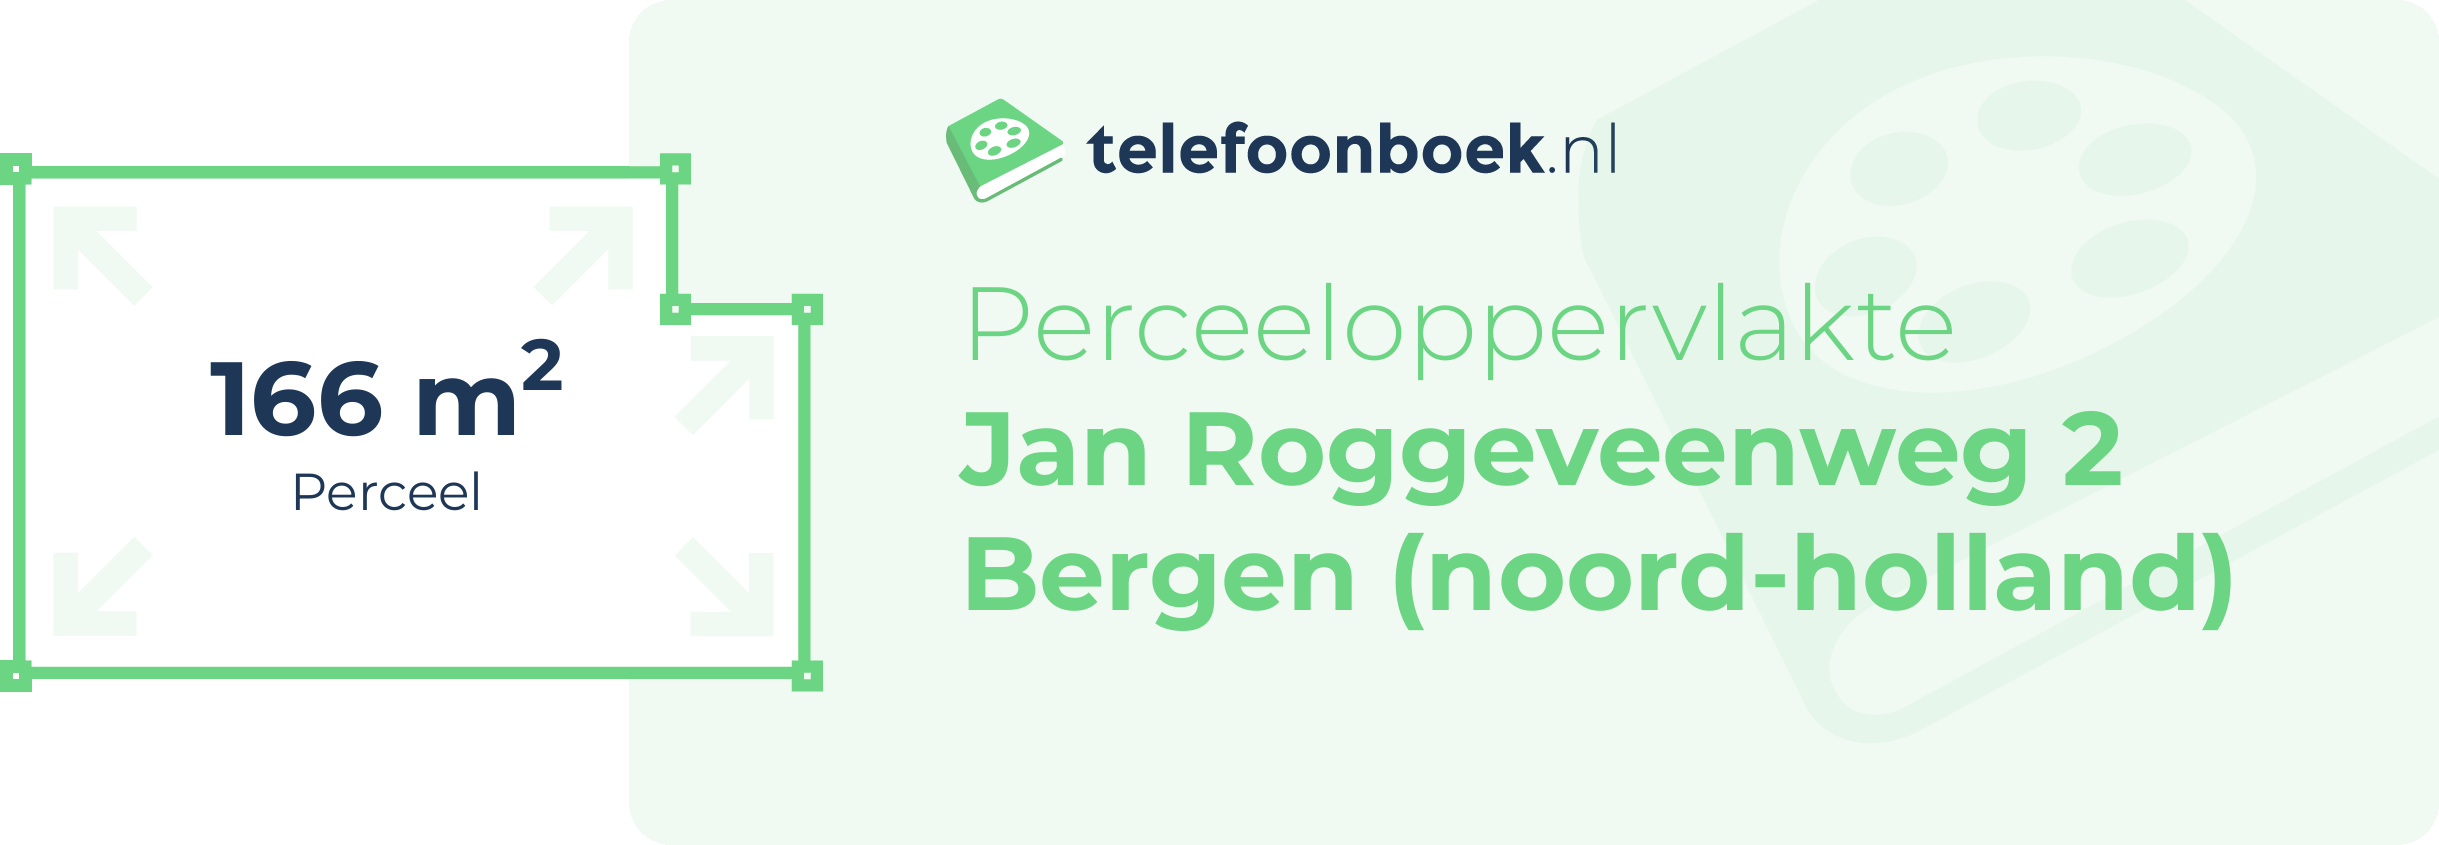 Perceeloppervlakte Jan Roggeveenweg 2 Bergen (Noord-Holland)